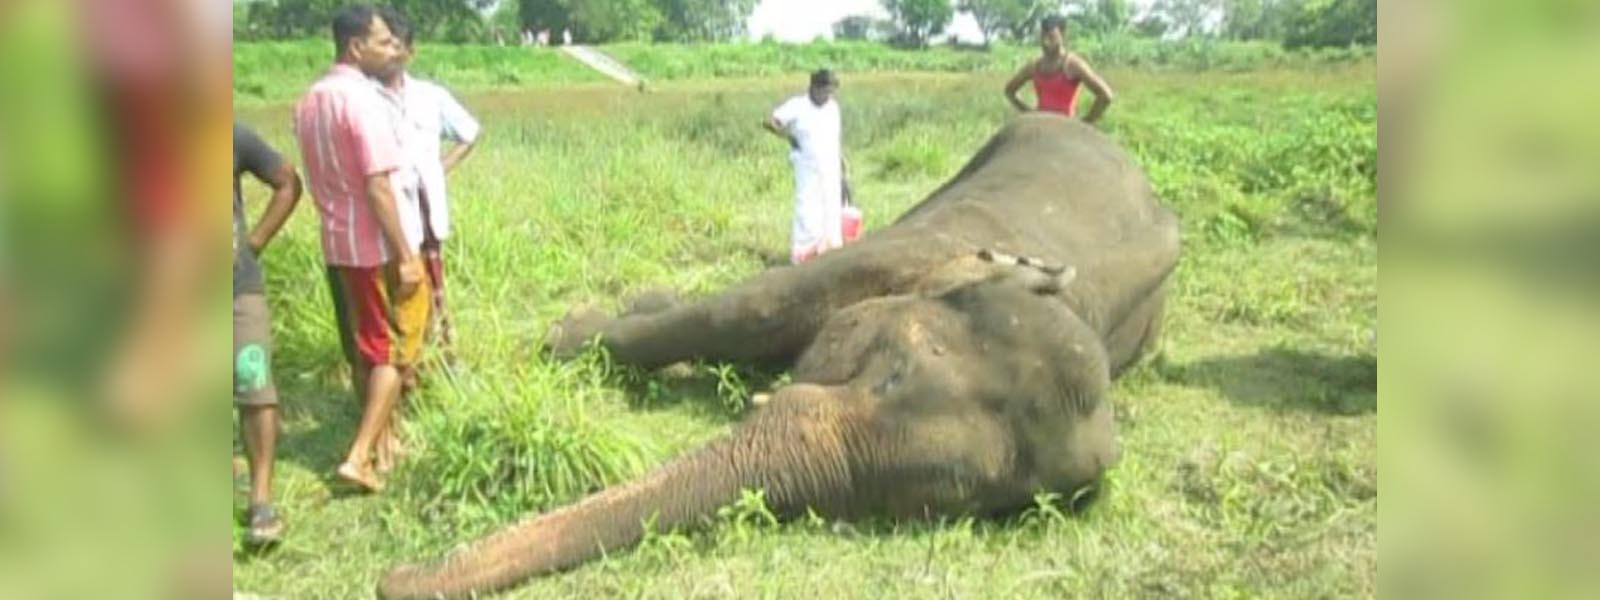 Dying Elephants' tusks sheared 